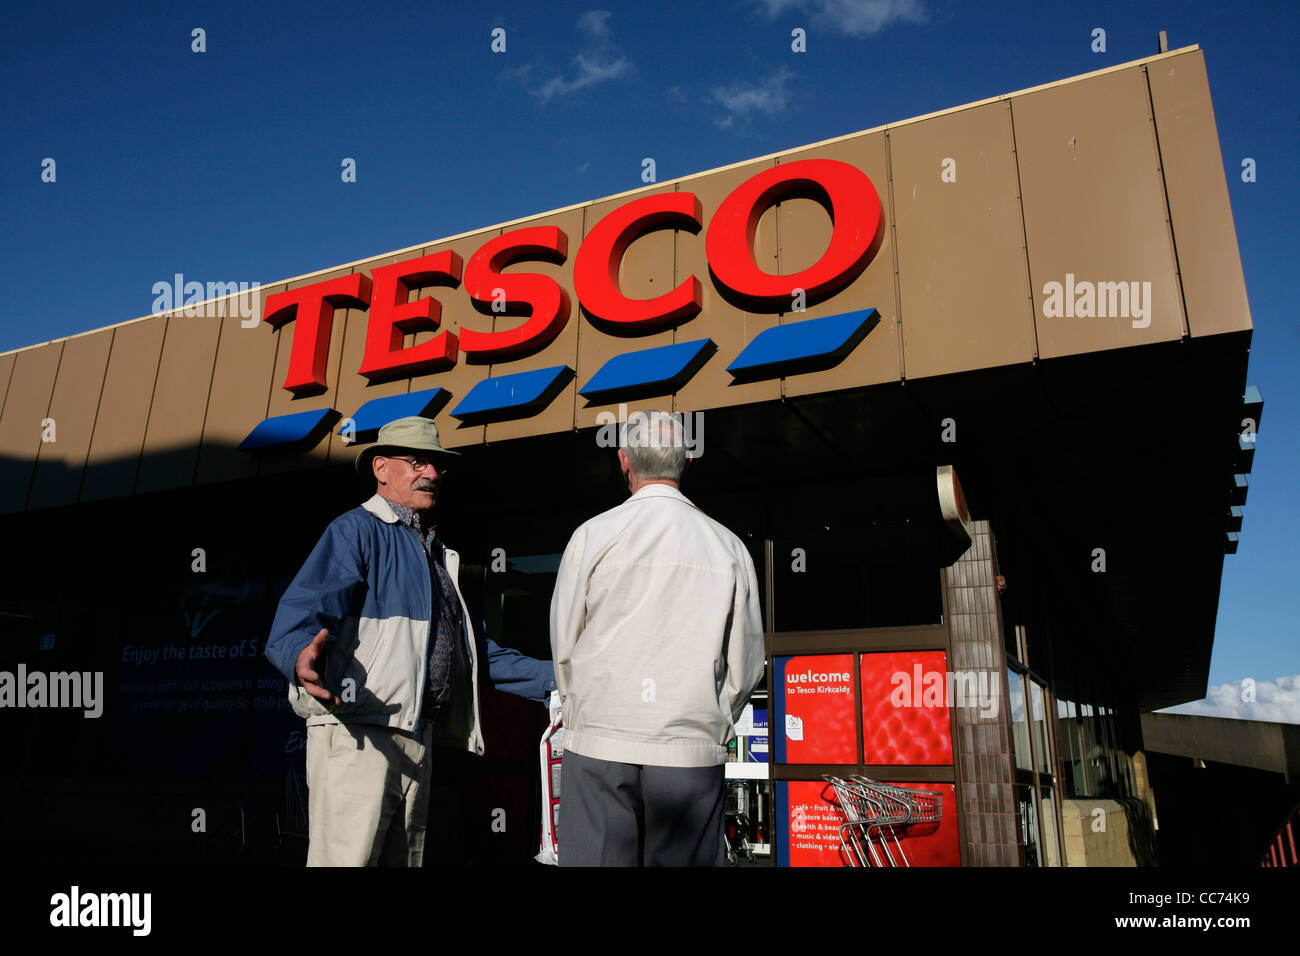 Two elderly men standing outside a Tesco supermarket Stock Photo